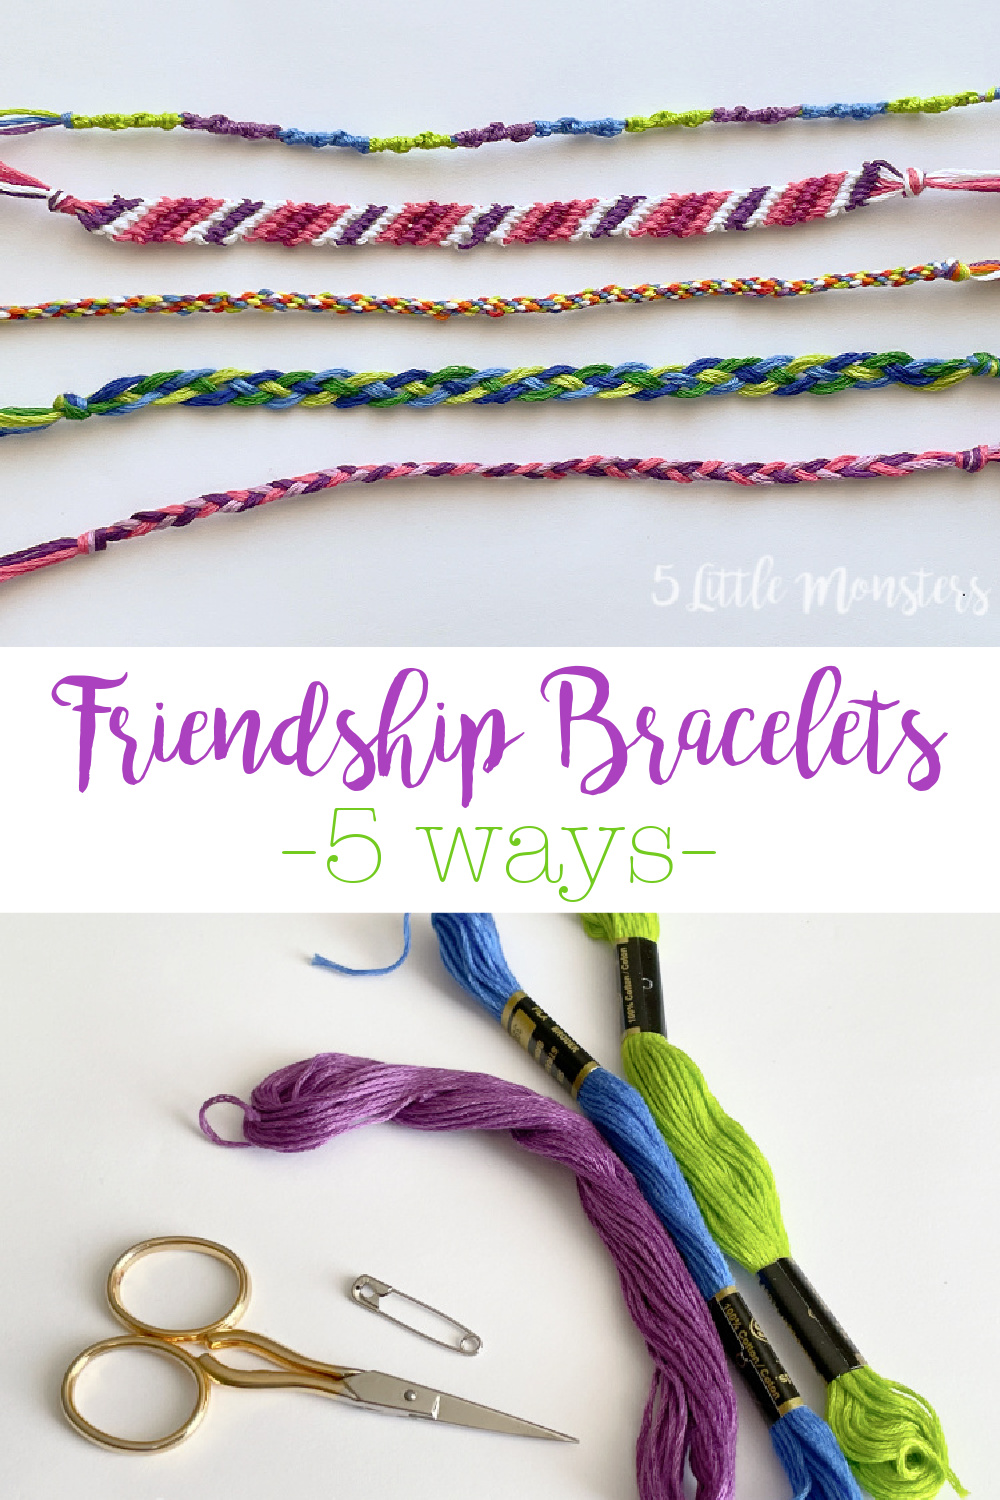 4 Ways to Make a String Bracelet - wikiHow